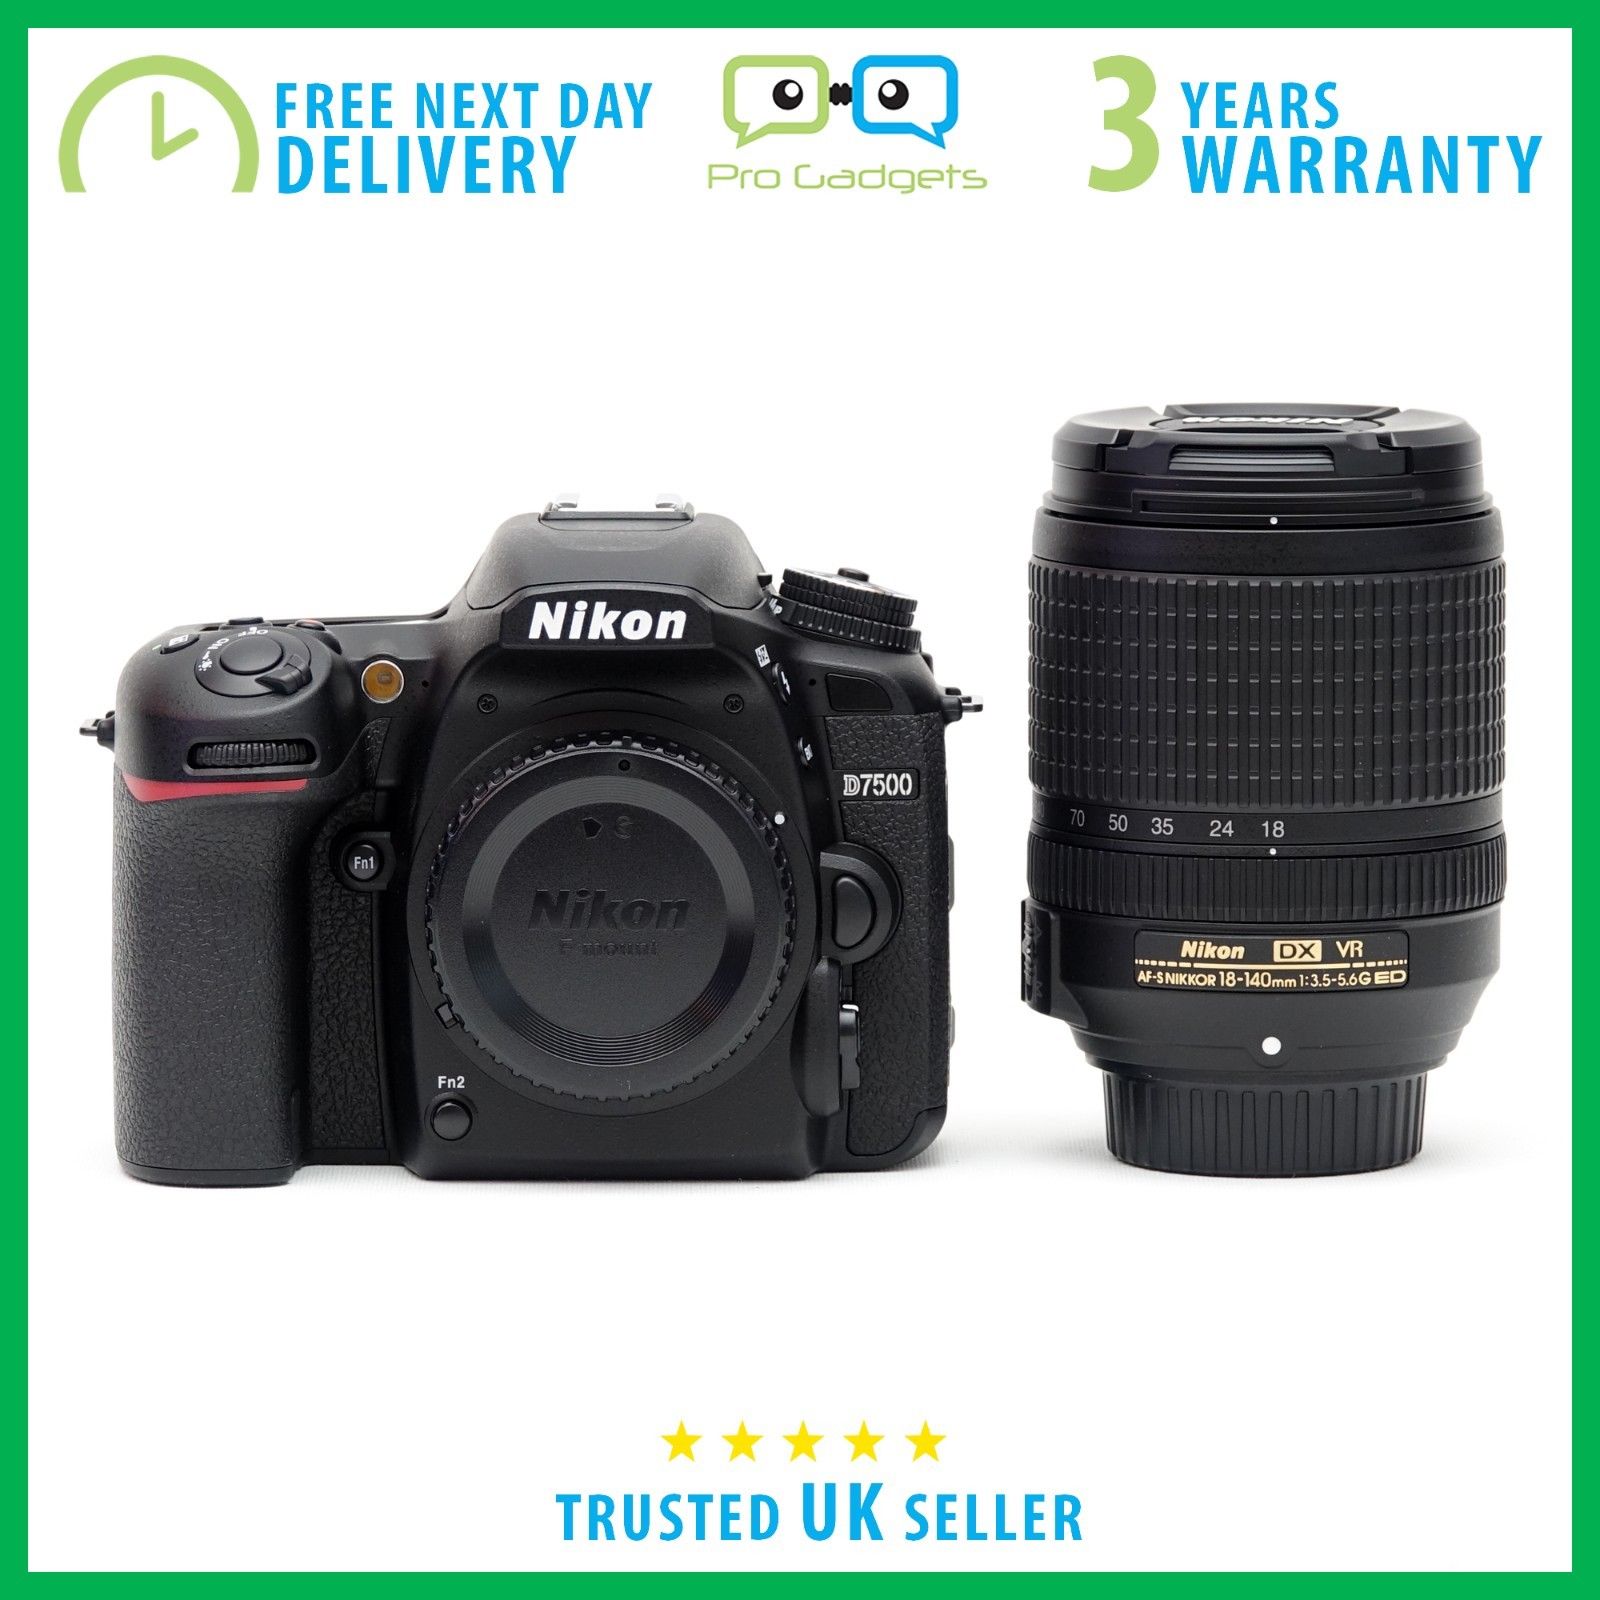 New Nikon D7500 20.9MP CMOS 4K DSLR With 18-140mm VR Lens - 3 Year Warranty